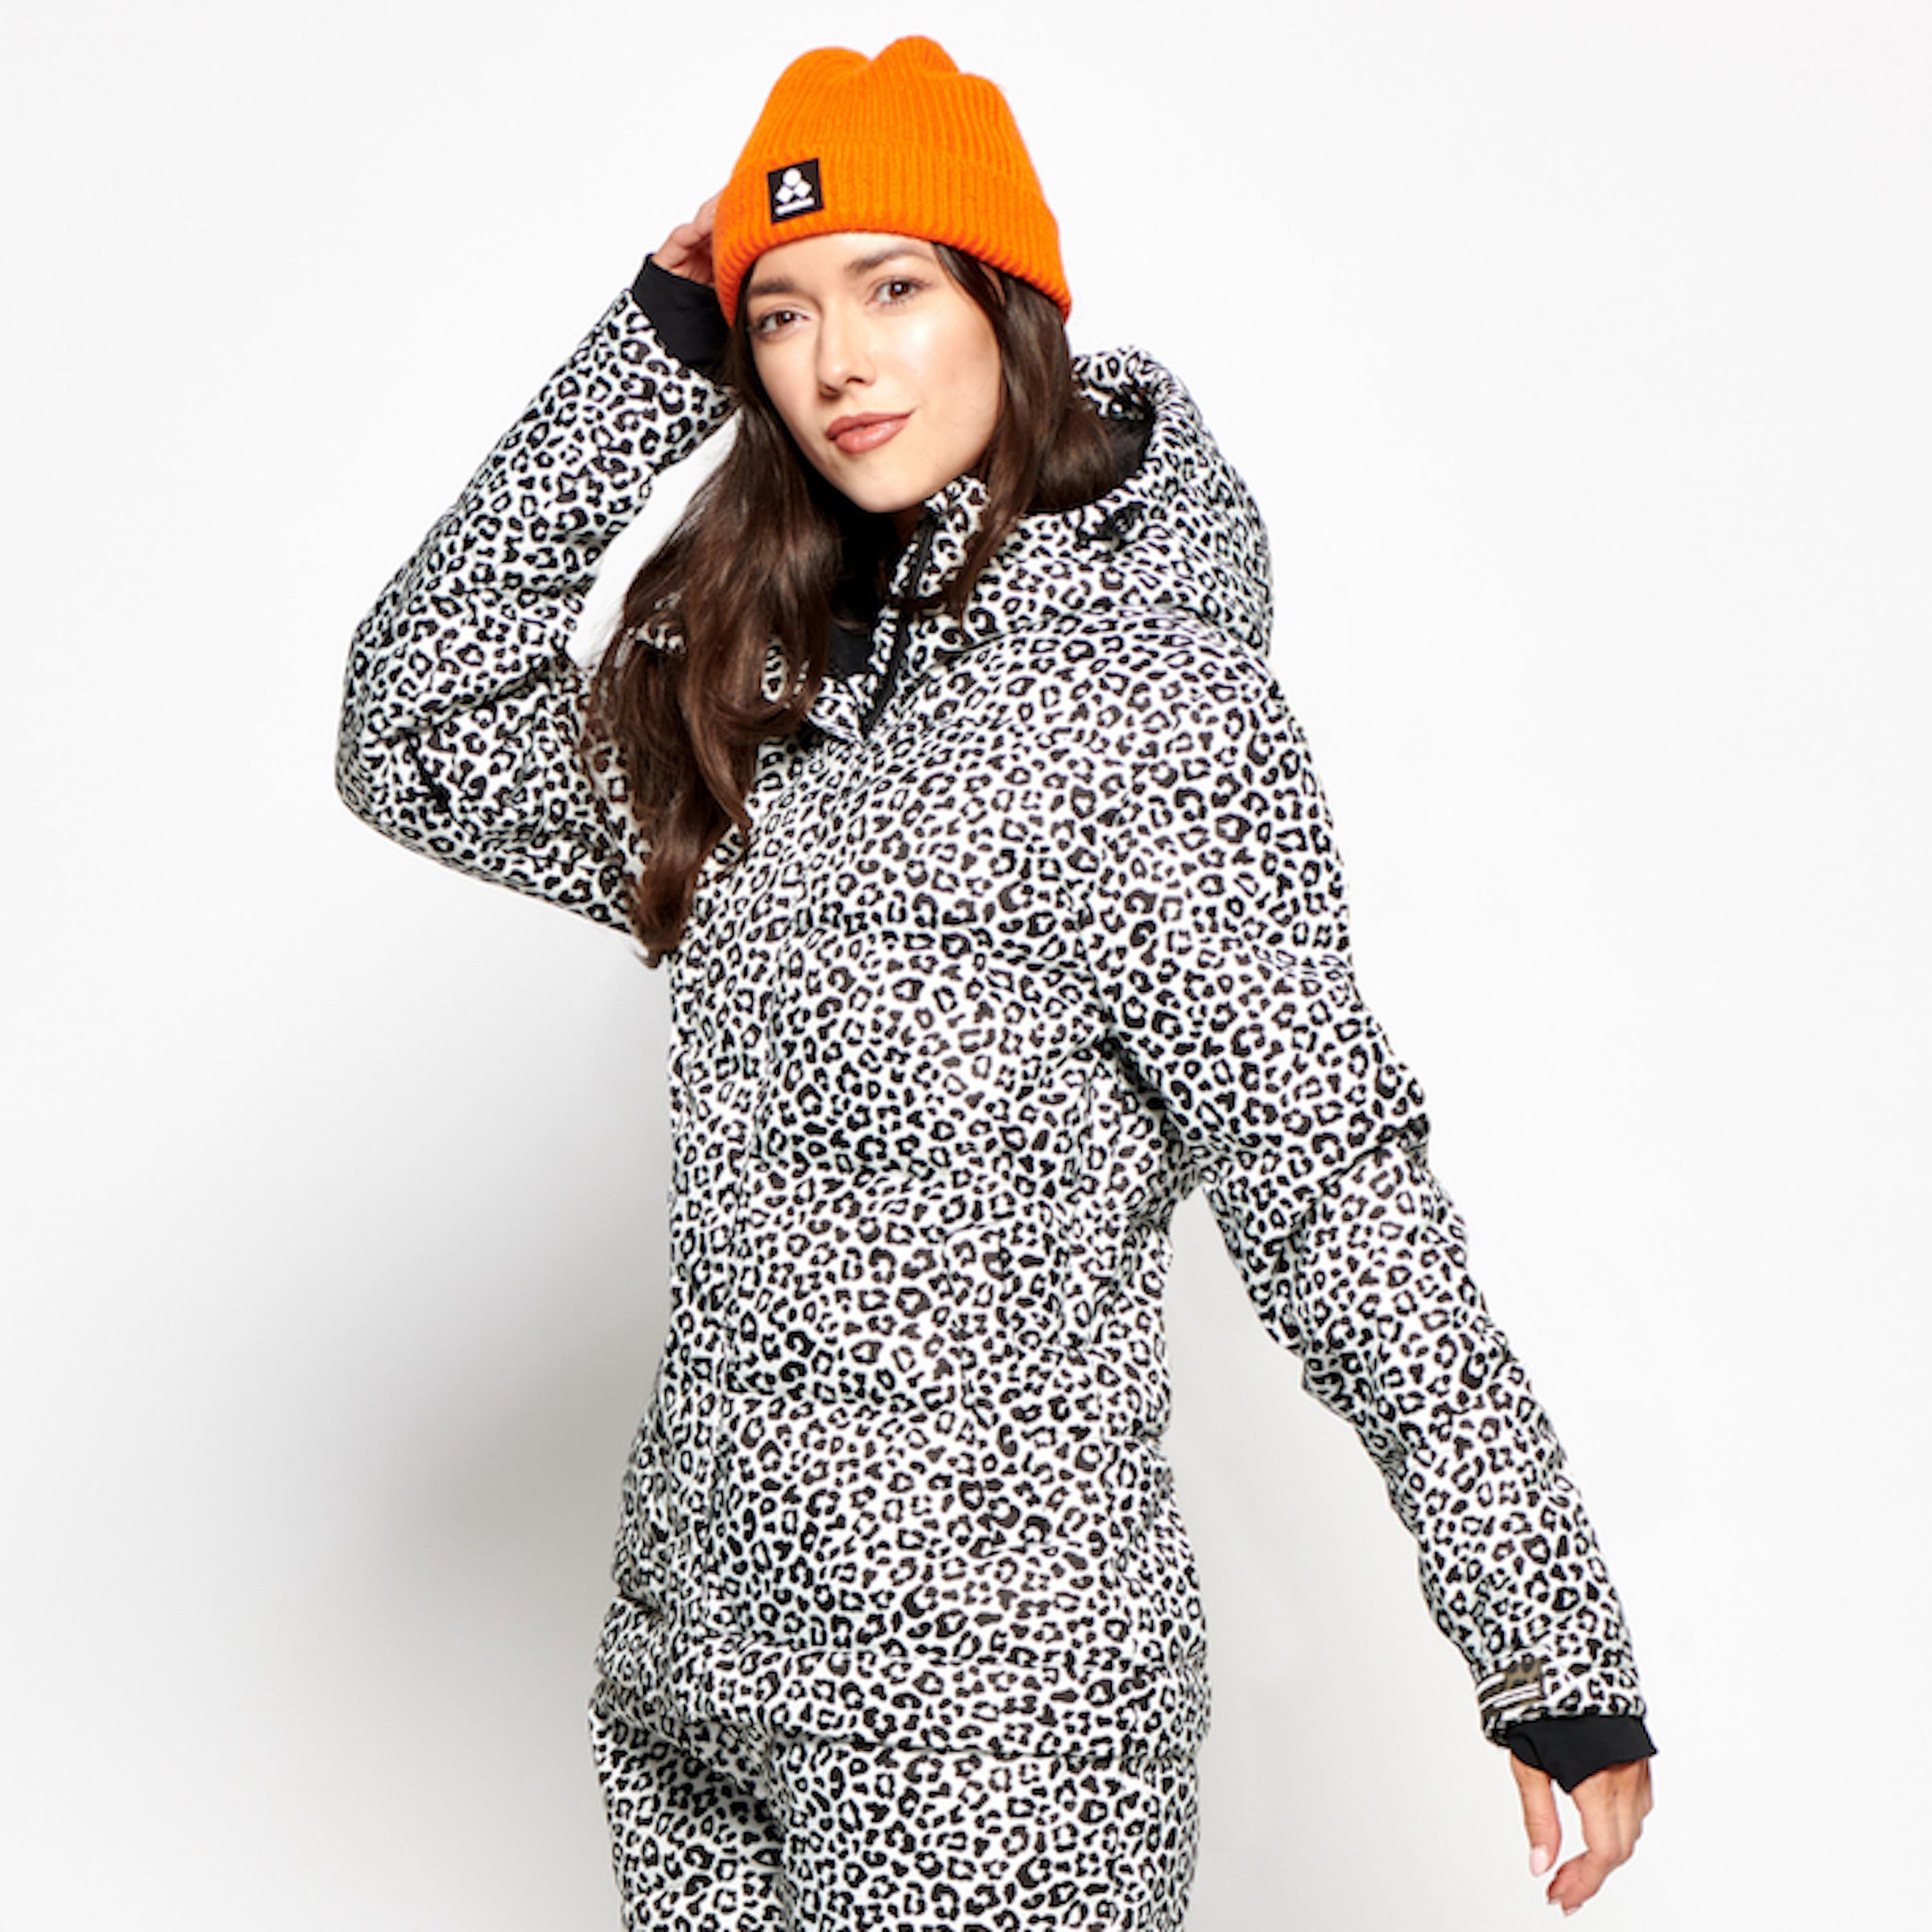 Women's 2-in-1 Snow Suit, Leopard